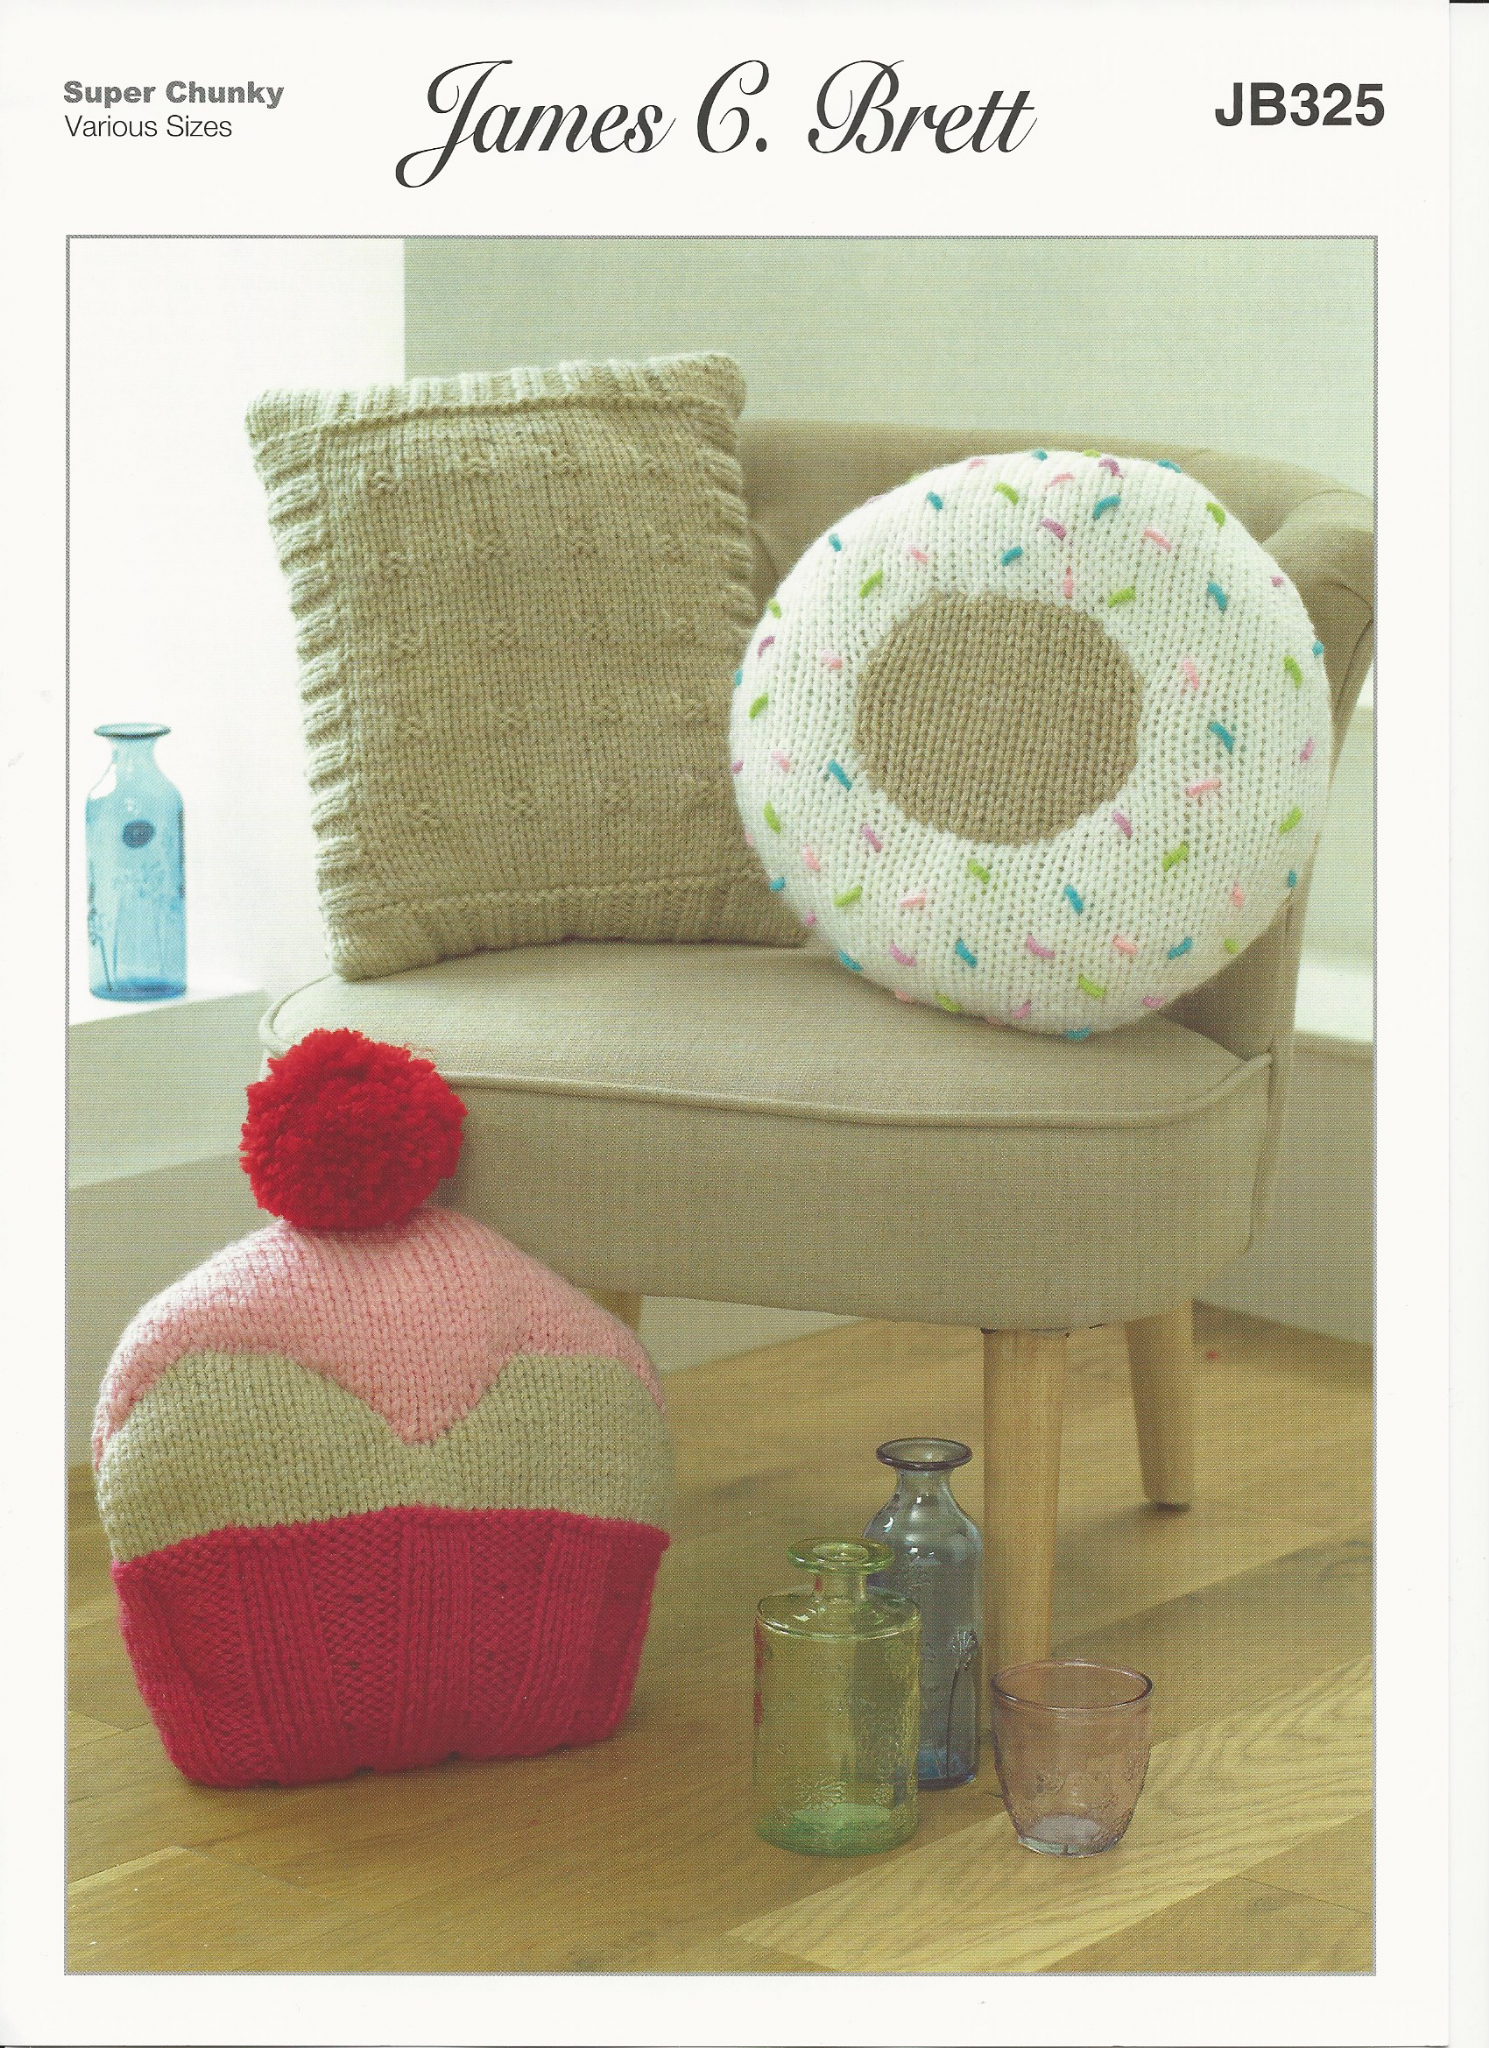 Knitting Patterns For Cushions James C Brett Cushions Knitting Pattern In Super Chunky Jb325